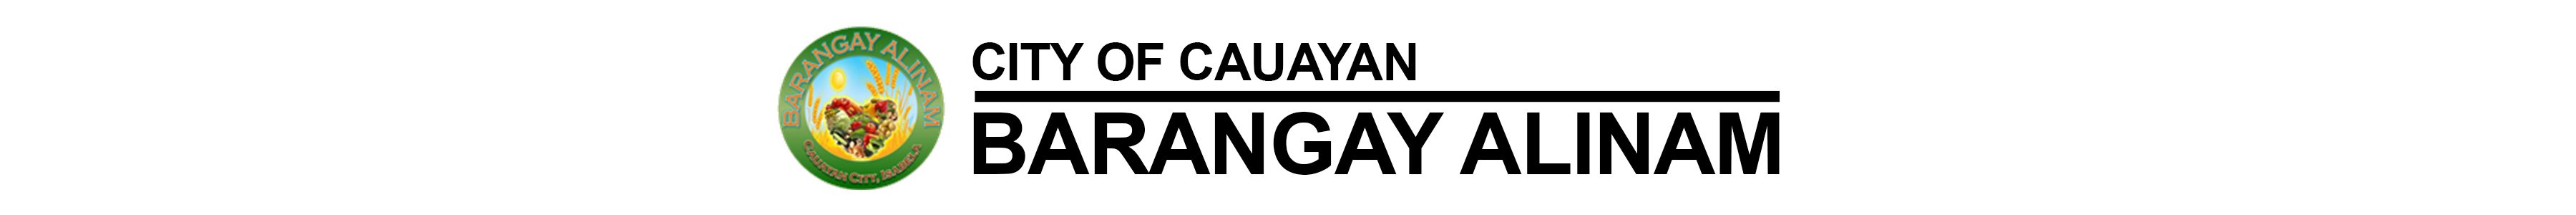 Barangay Alinam